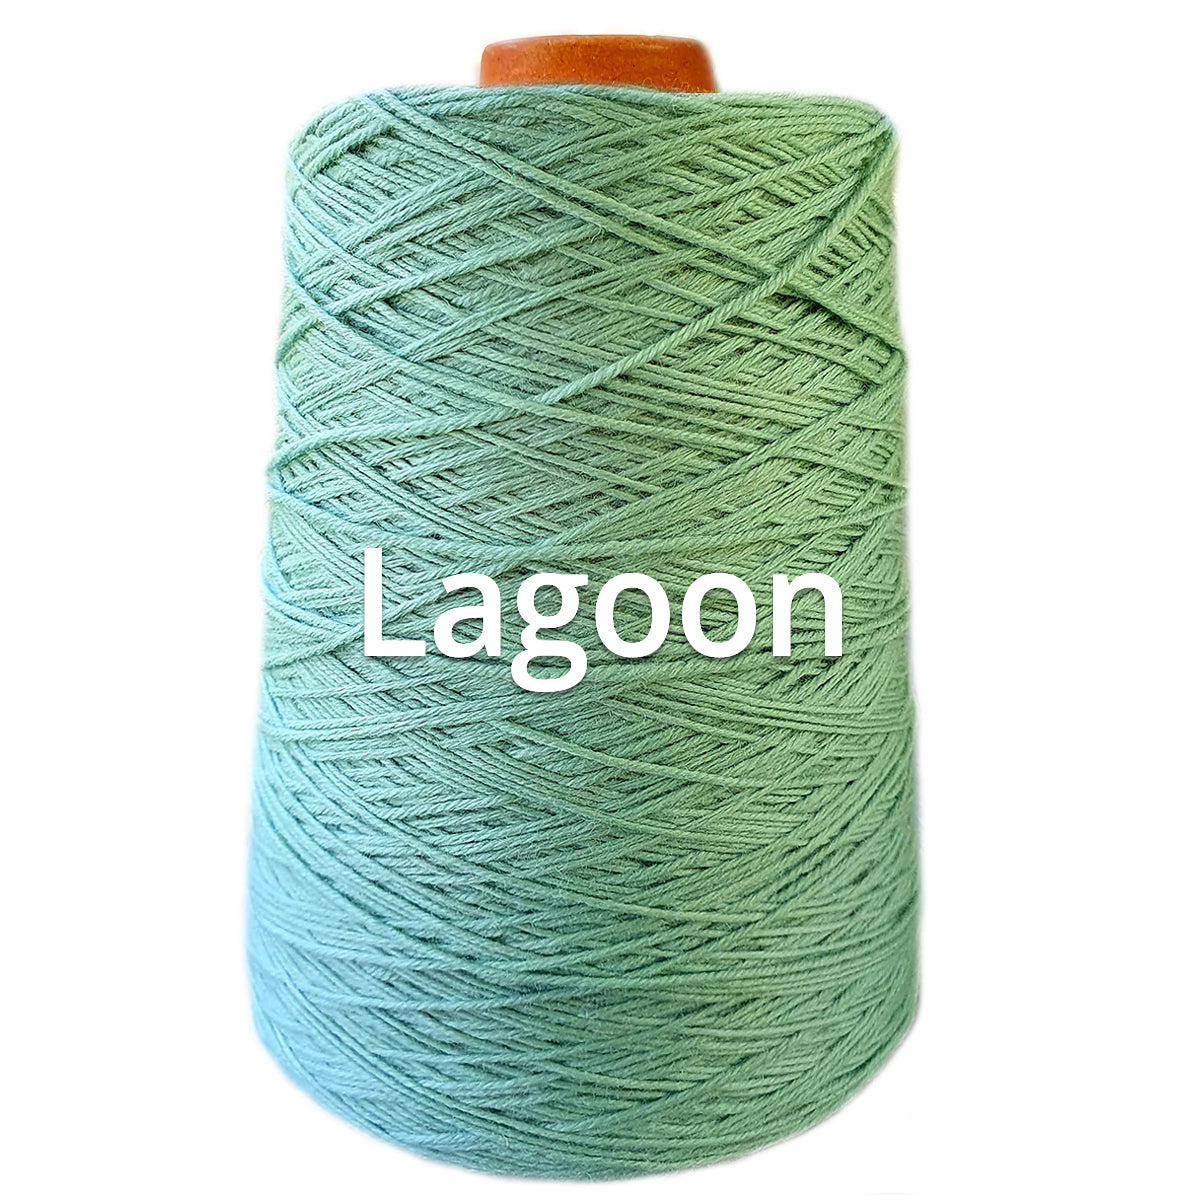 Lagoon - Nundle Collection 8 ply Chaffey Yarn 400g Cone